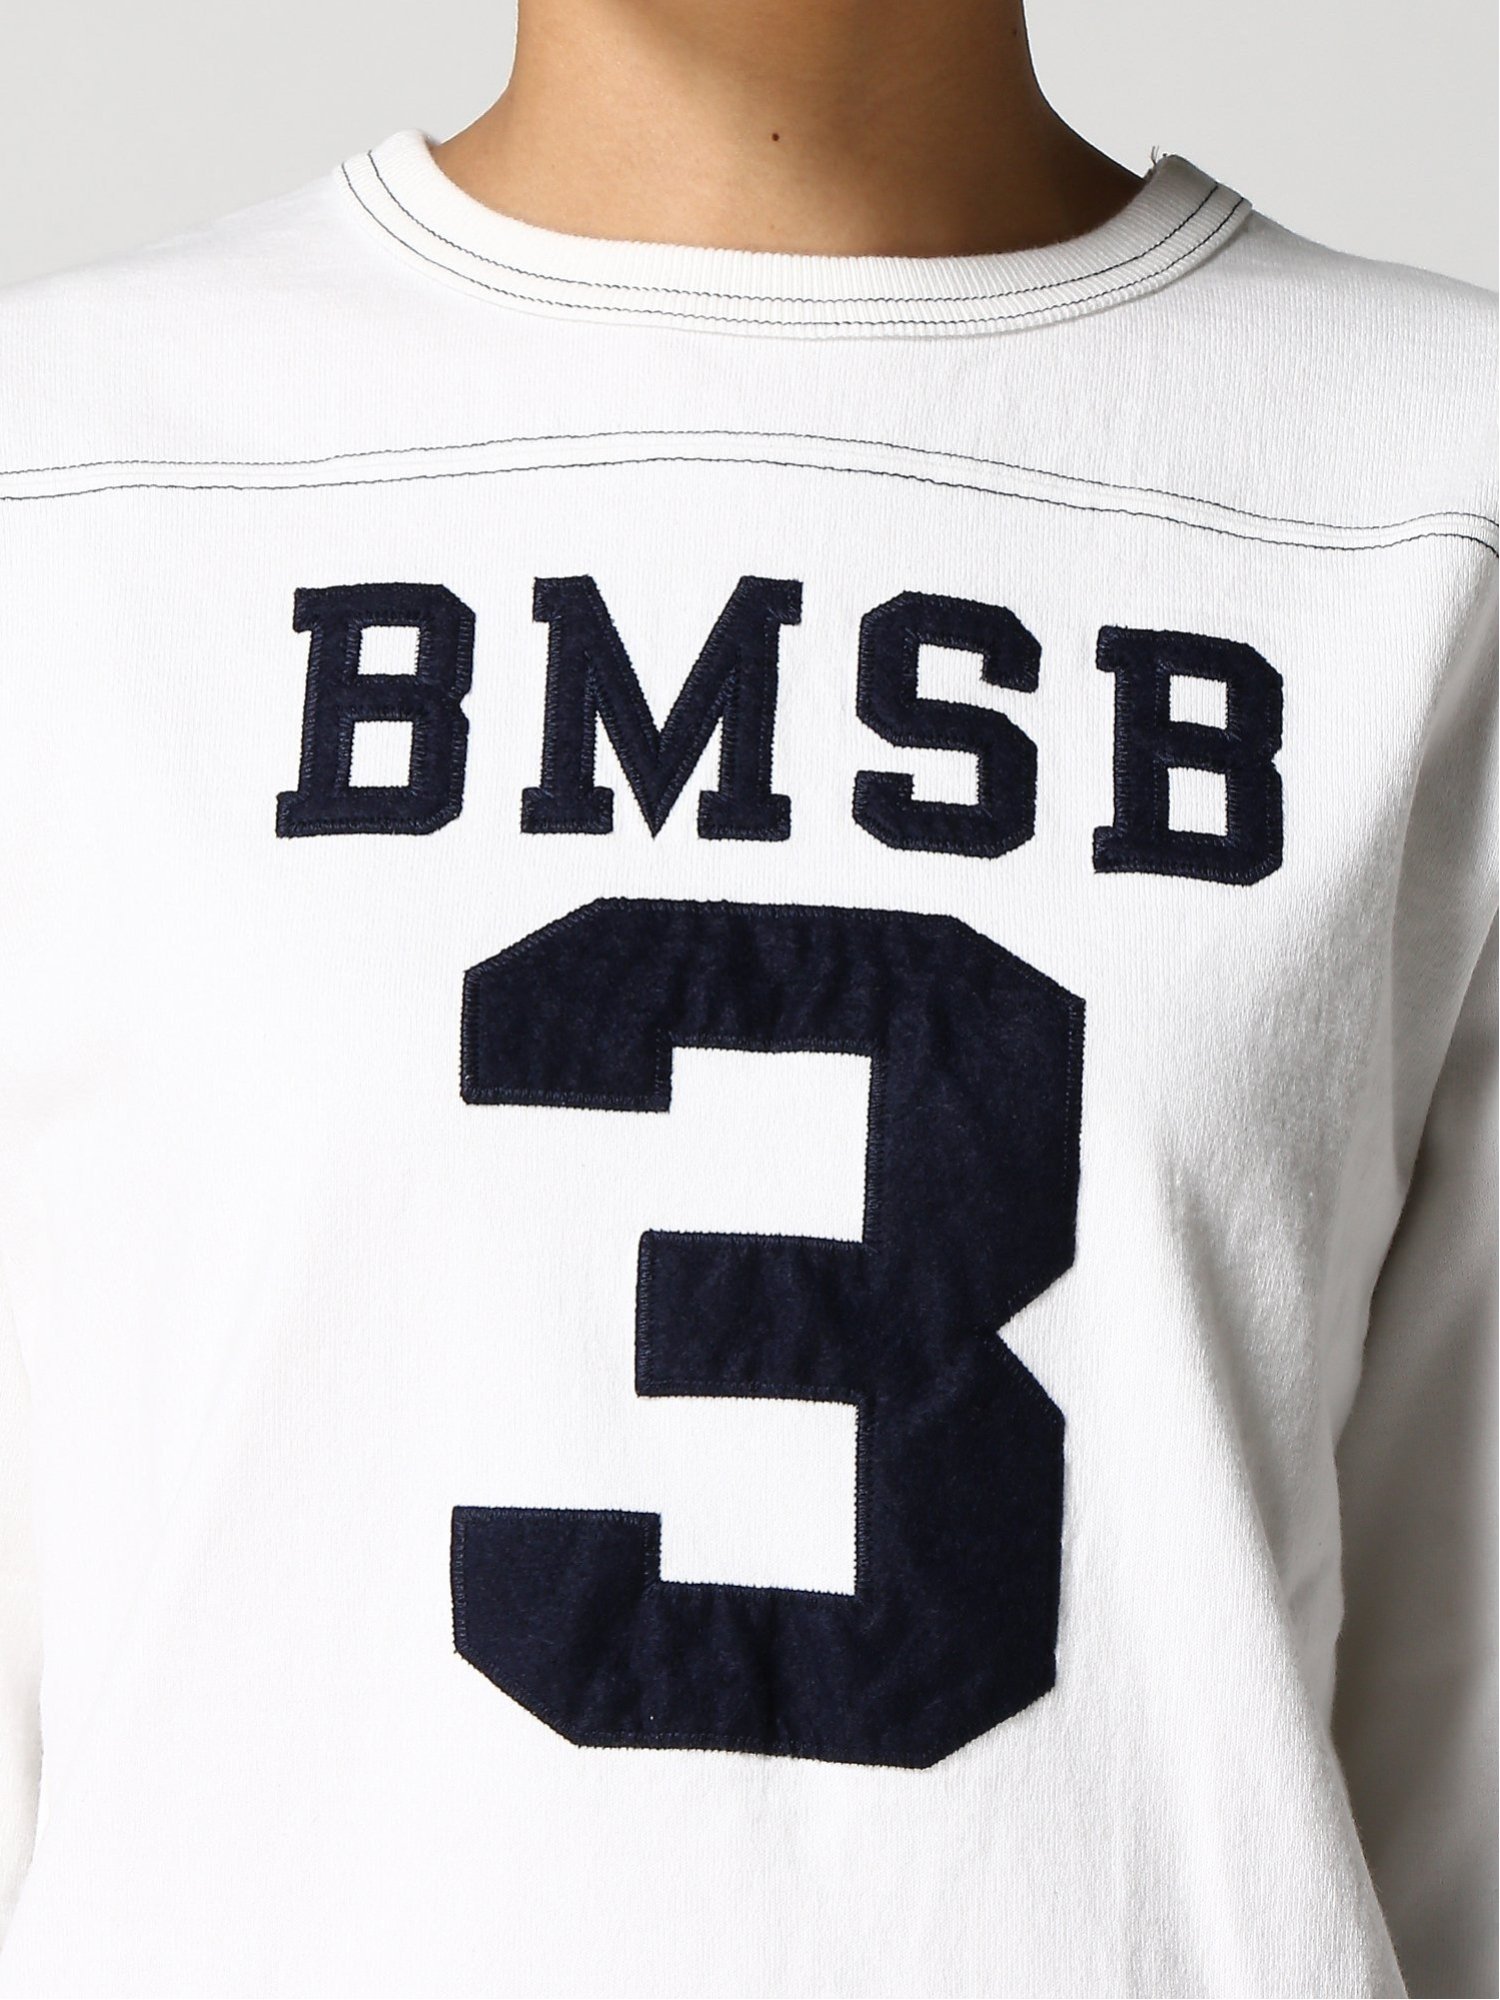 BEAMS BOY / テンジク フットボール 3/4 Tシャツ